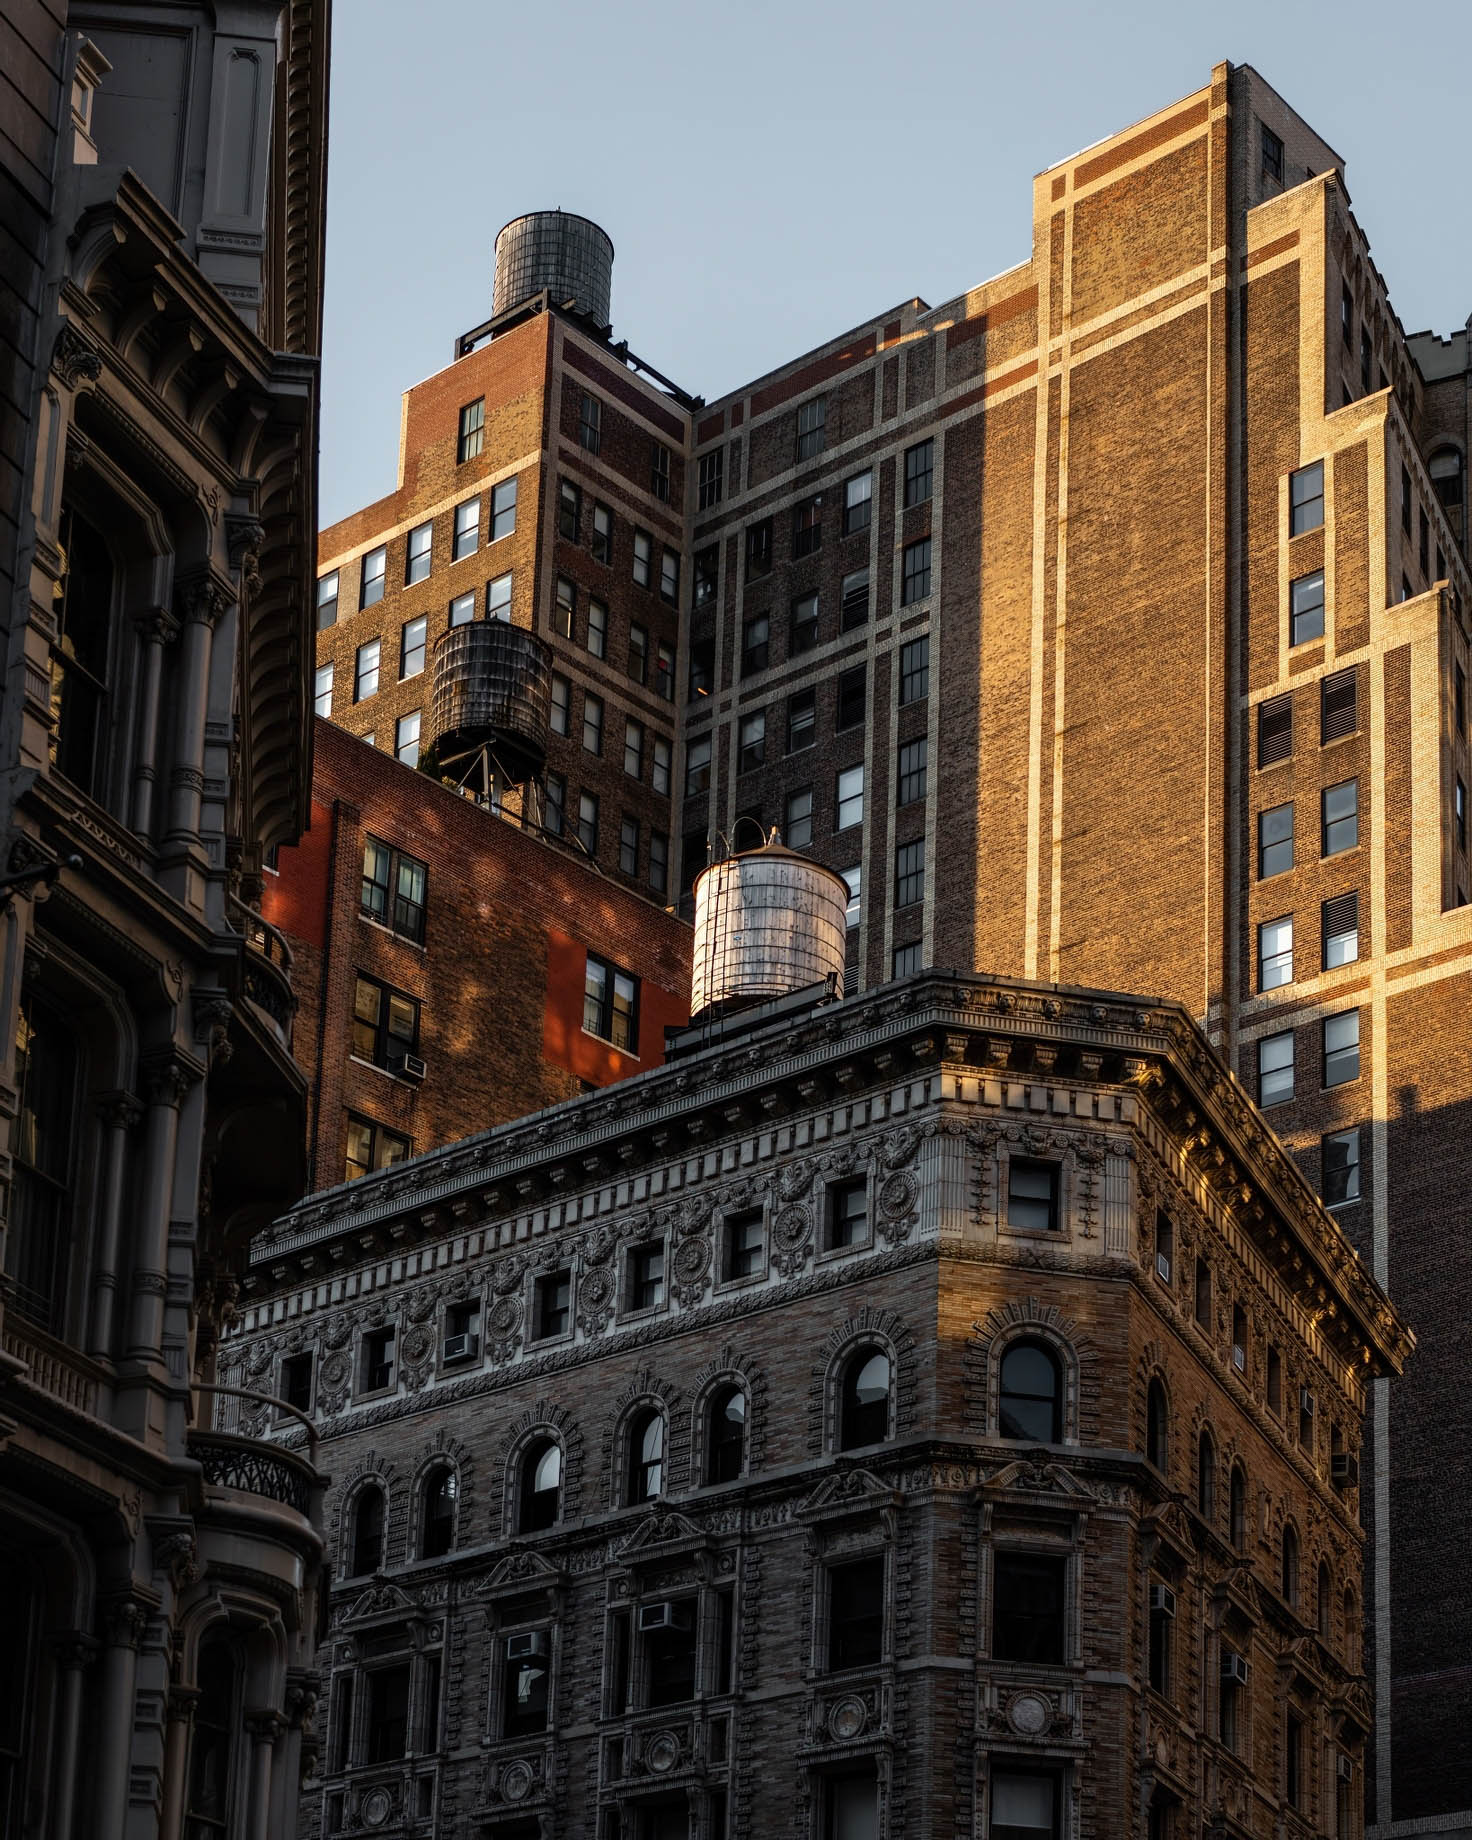 The New York EDITION Hotel - New York, NY, USA - Flatiron Neighborhood Textures